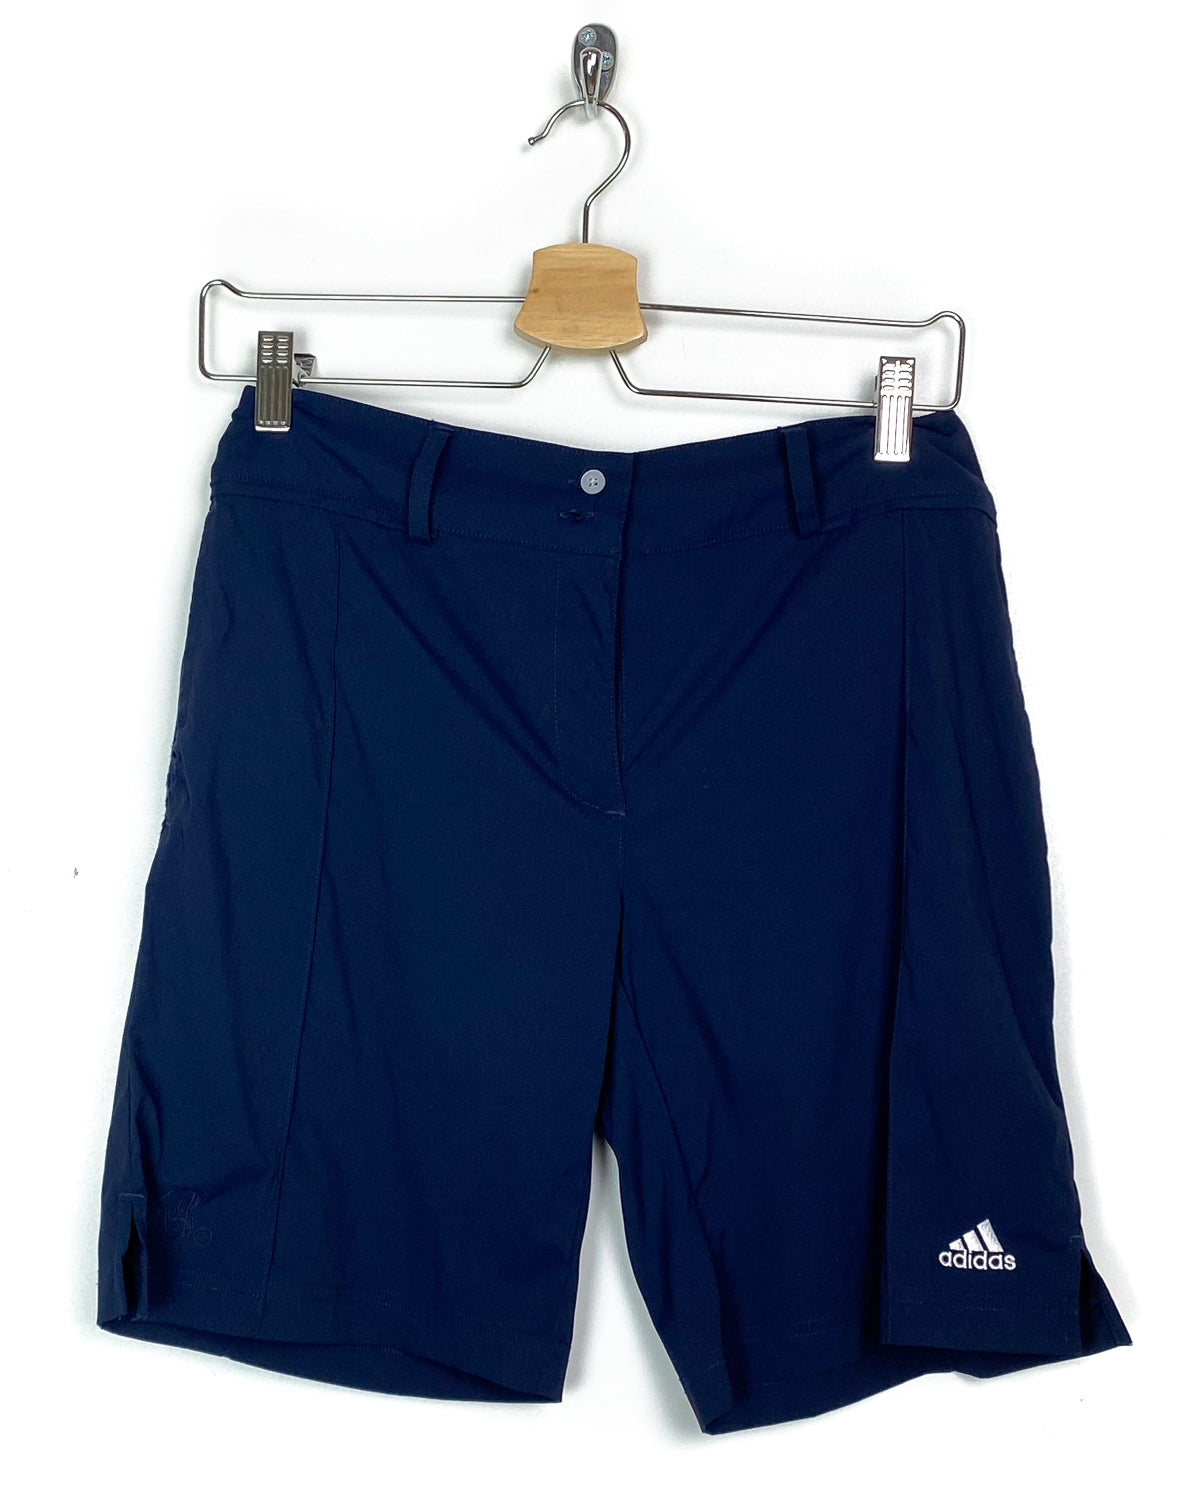 Adidas - Shorts Vintage Taglia 40